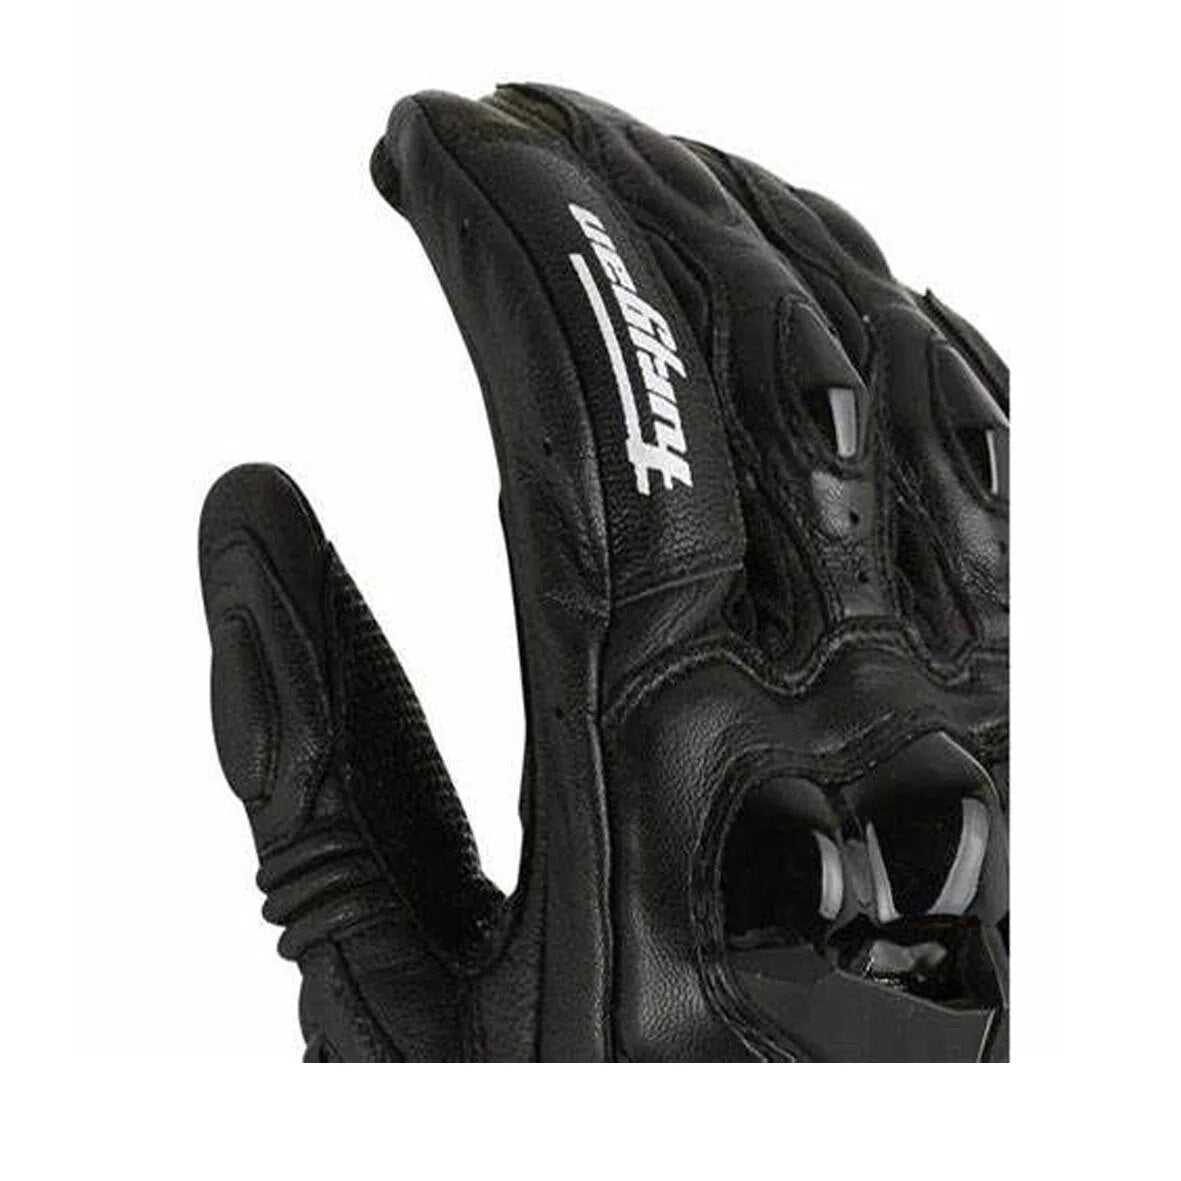 Motorcycle Accessories Gloves For Men Guantes Motocross Cafe Racer Gant CF Moto Cross Dirt Bike Sportster Protection Motocykl